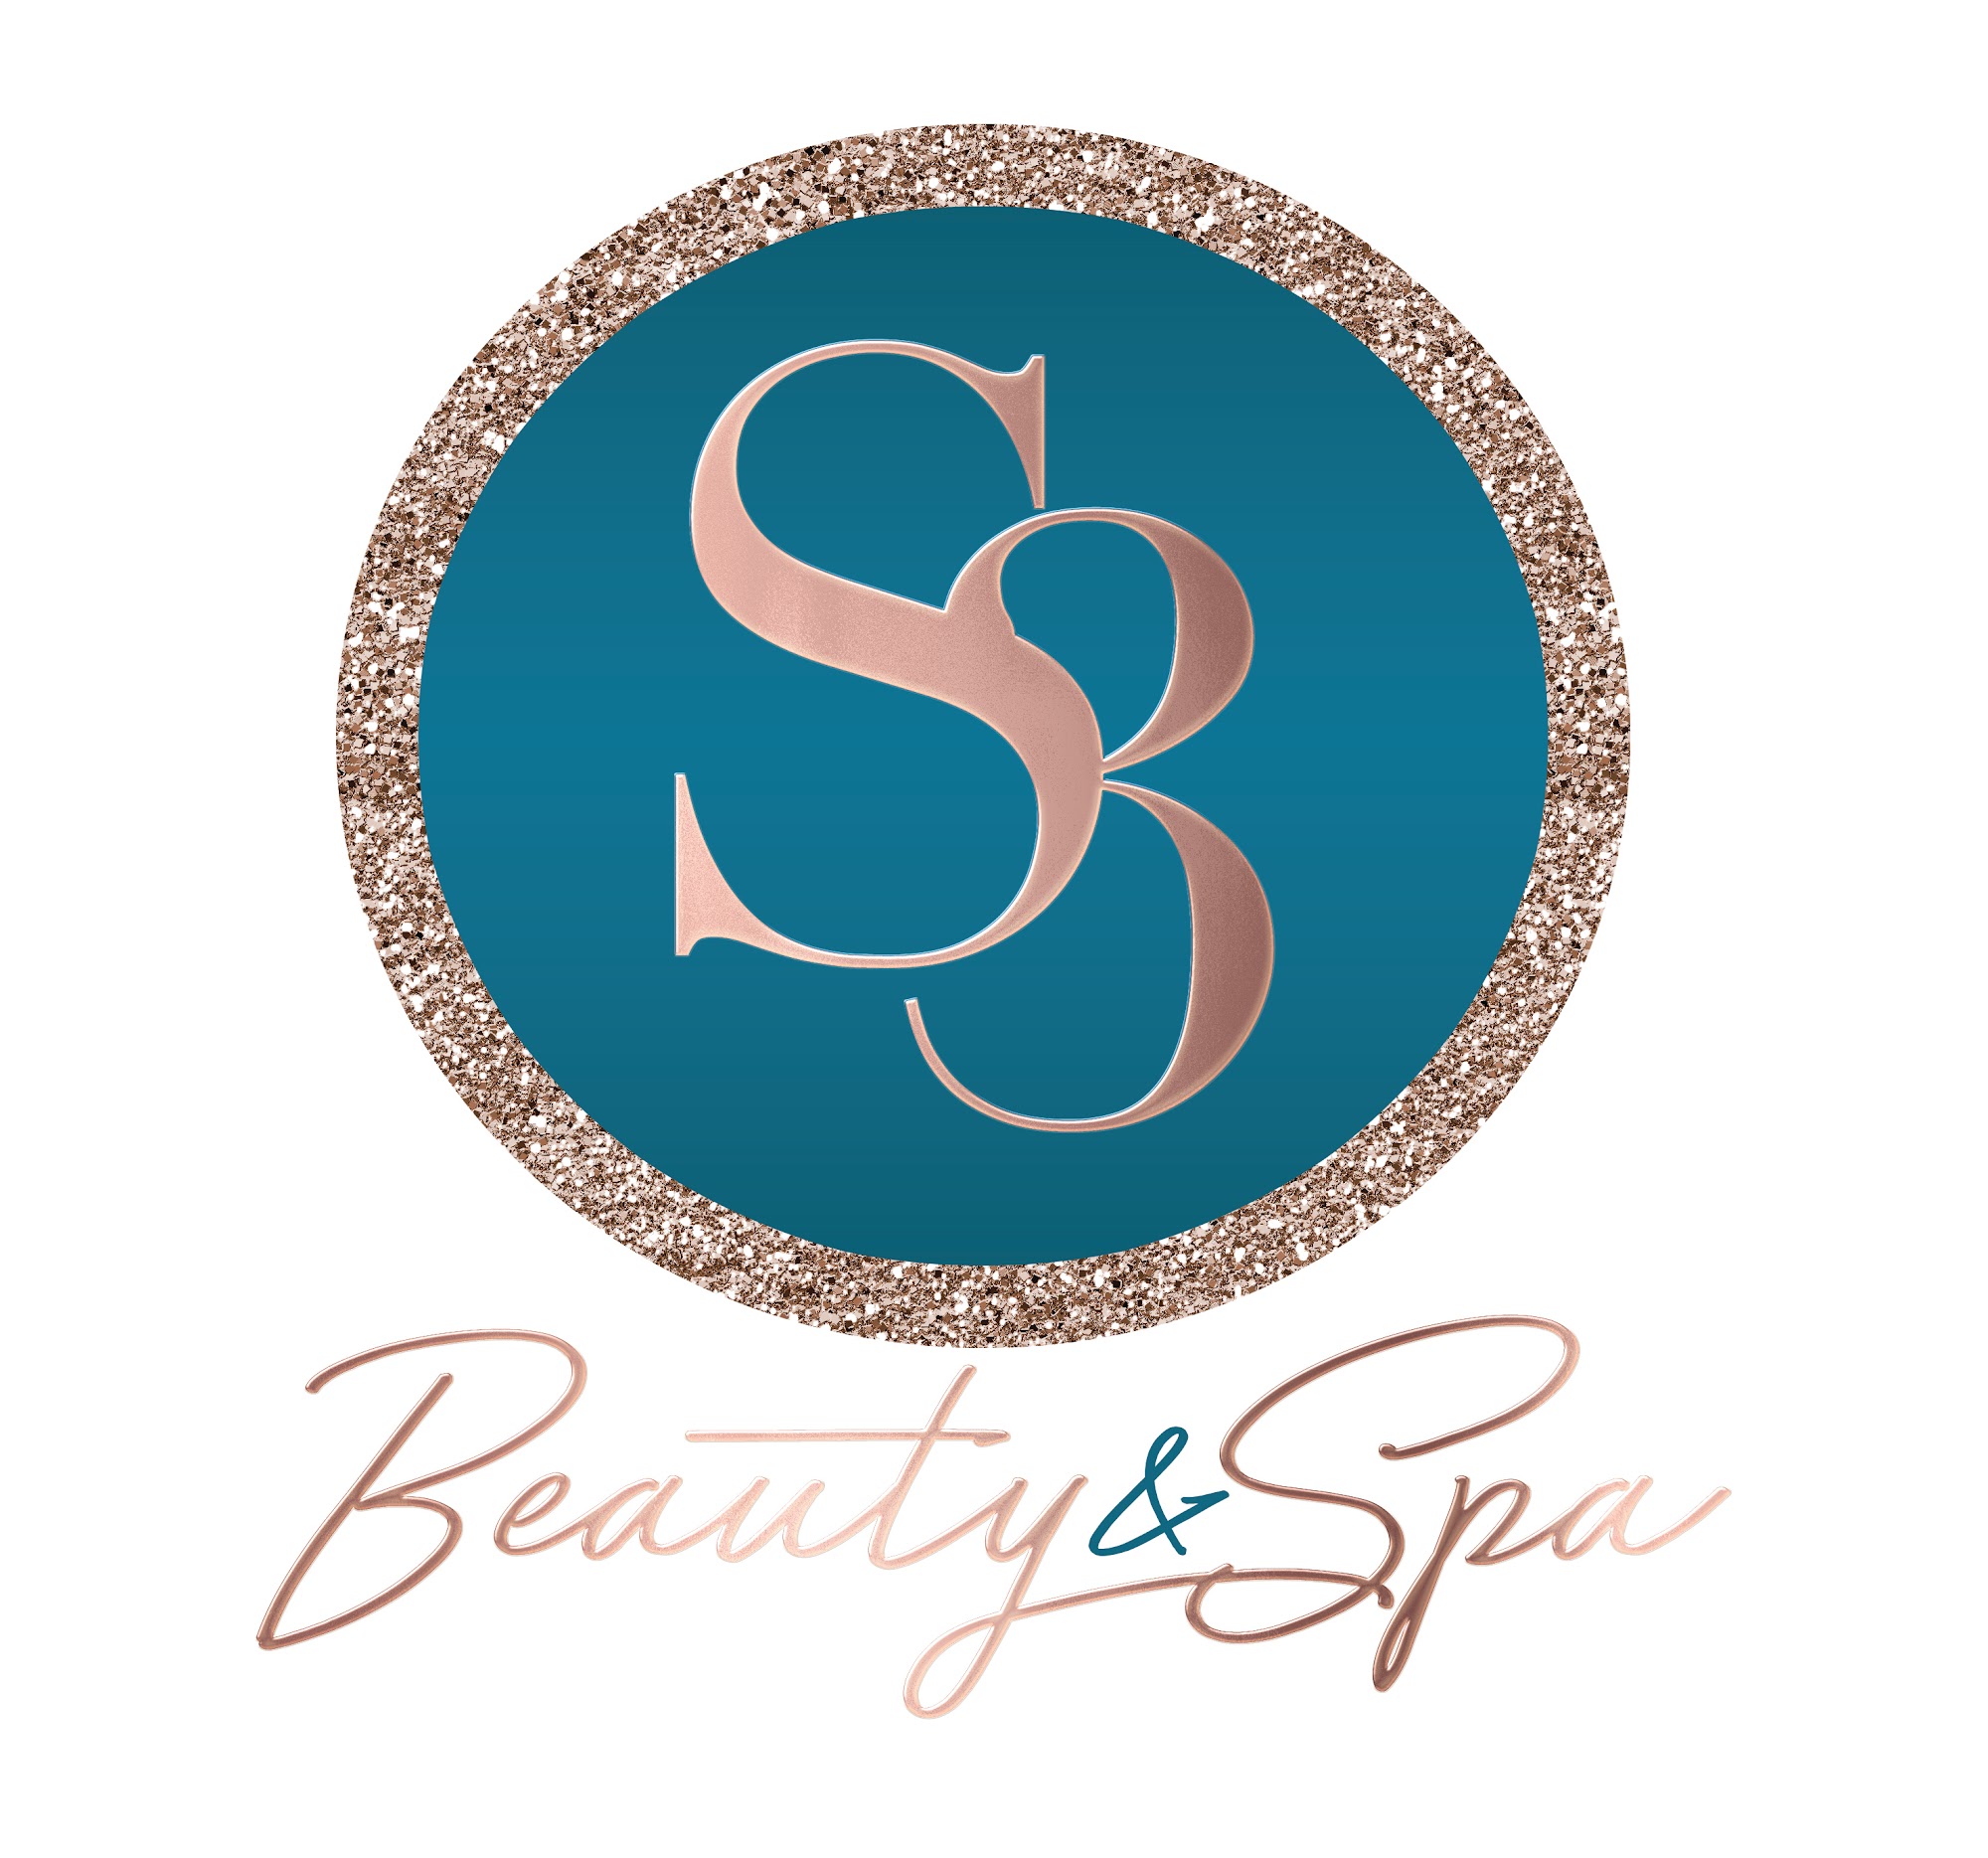 S3 Beauty and Spa LLC 3500 FL-7 #214, Lauderdale Lakes Florida 33319